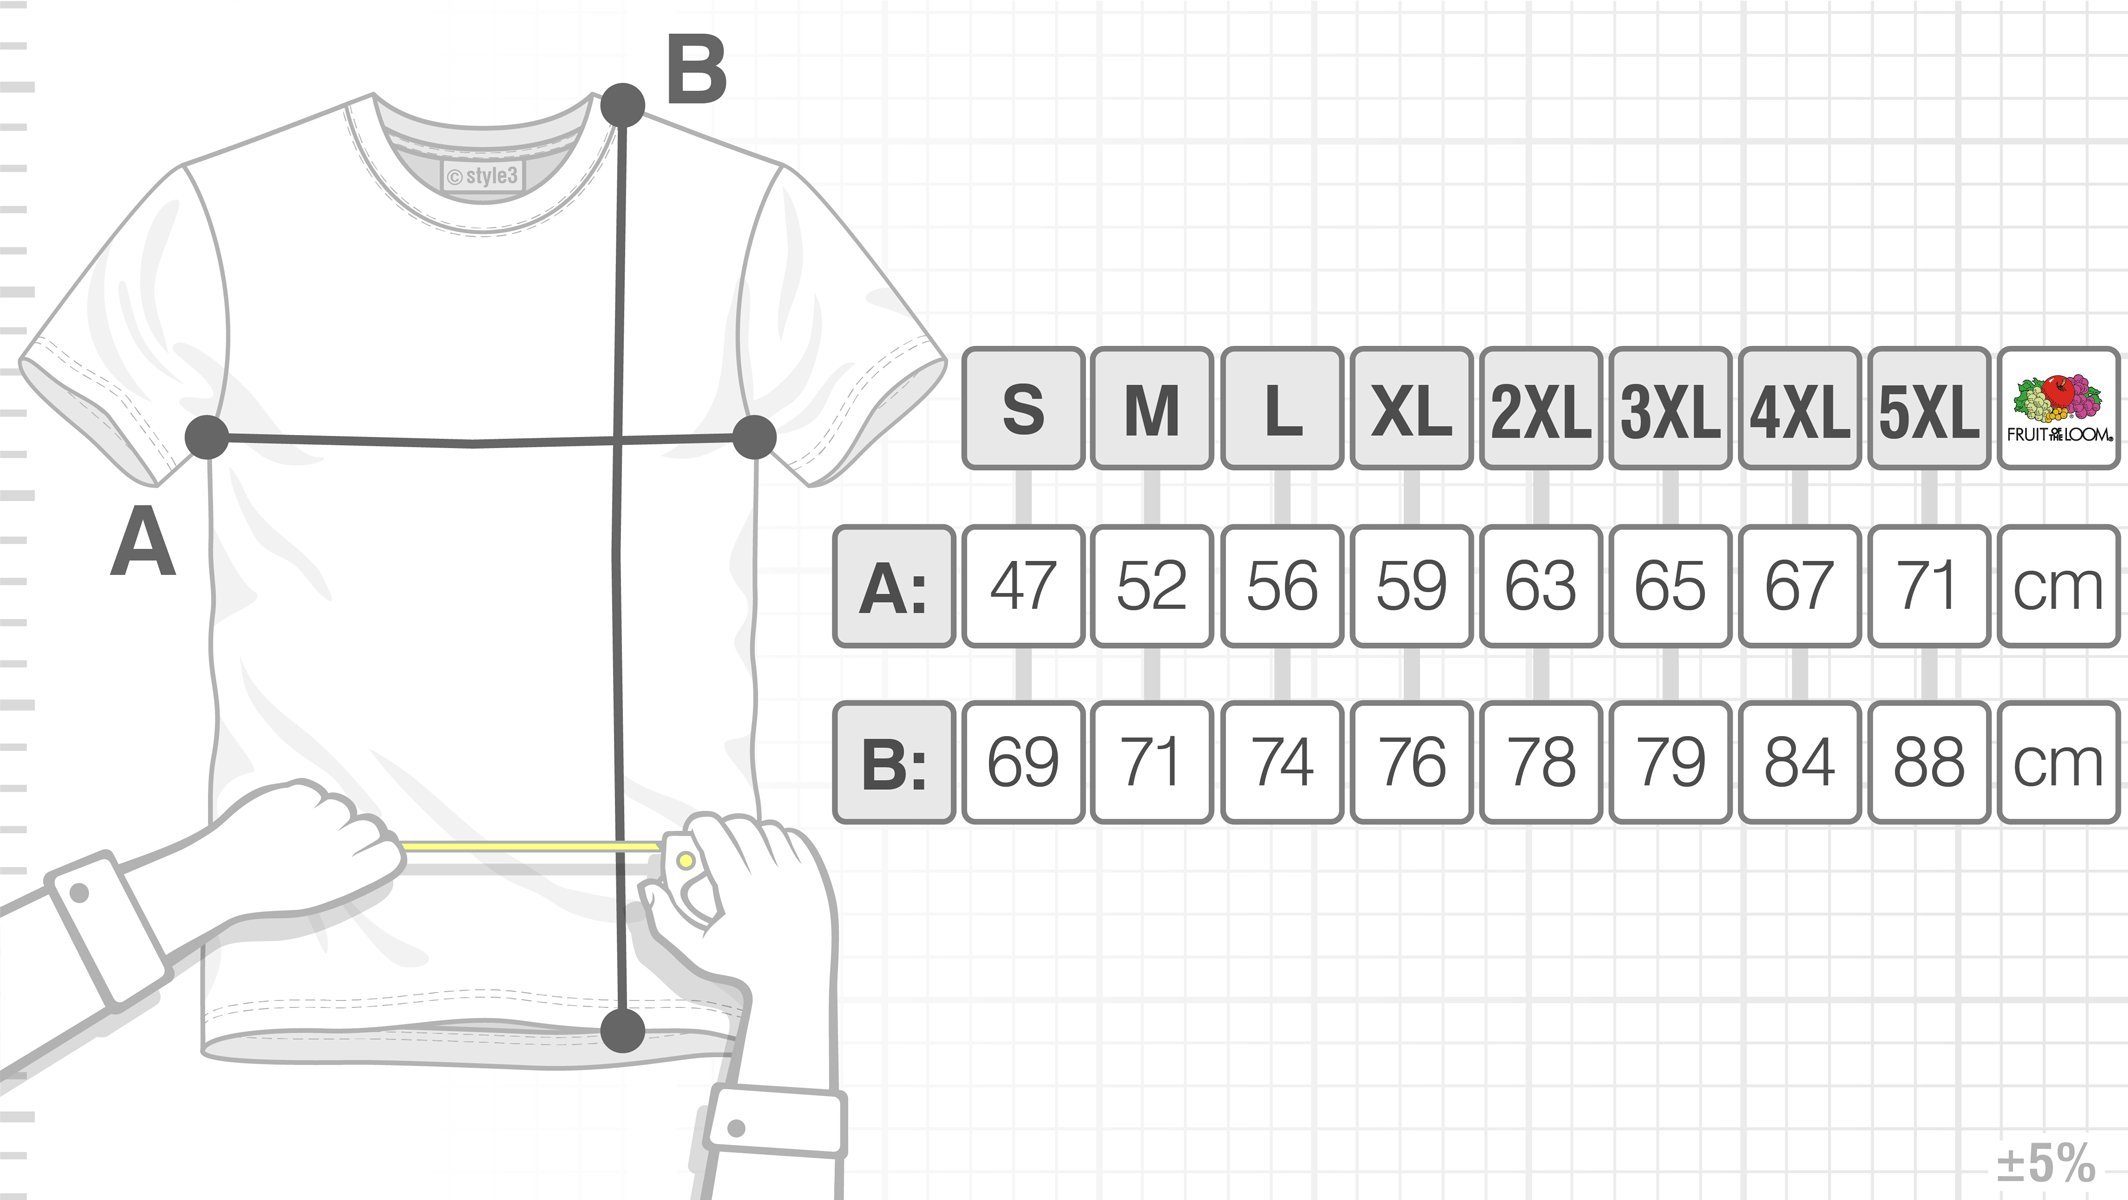 Boy konsole n64 schwarz nintendo Herren super style3 nes videospiel Virtual 32Bit T-Shirt gamer Print-Shirt